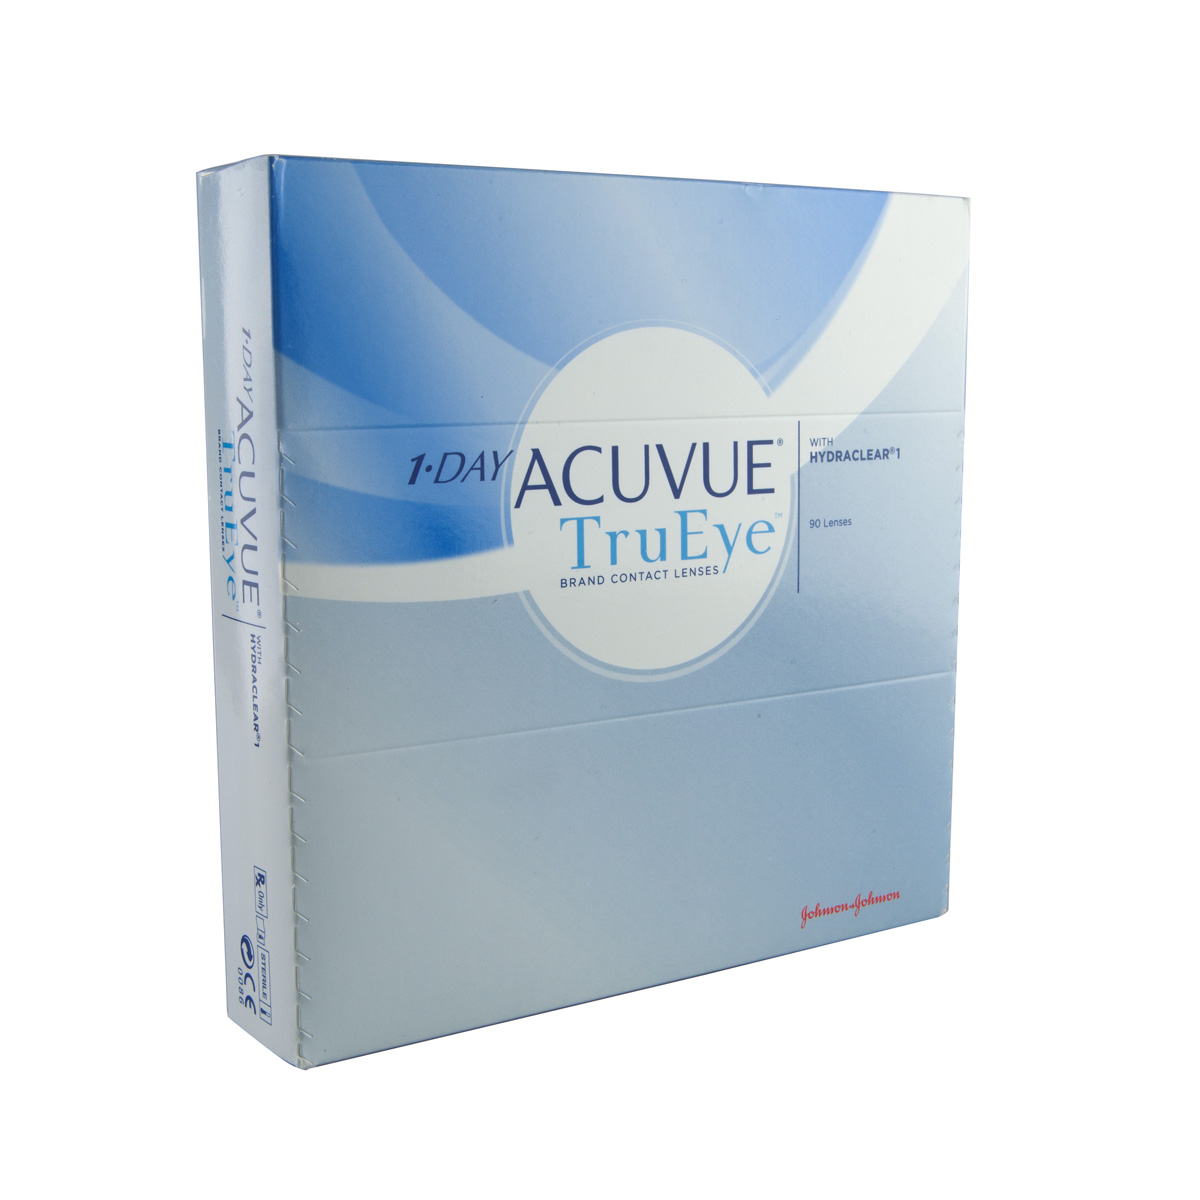 1 Day Acuvue TruEye (90 lenses)